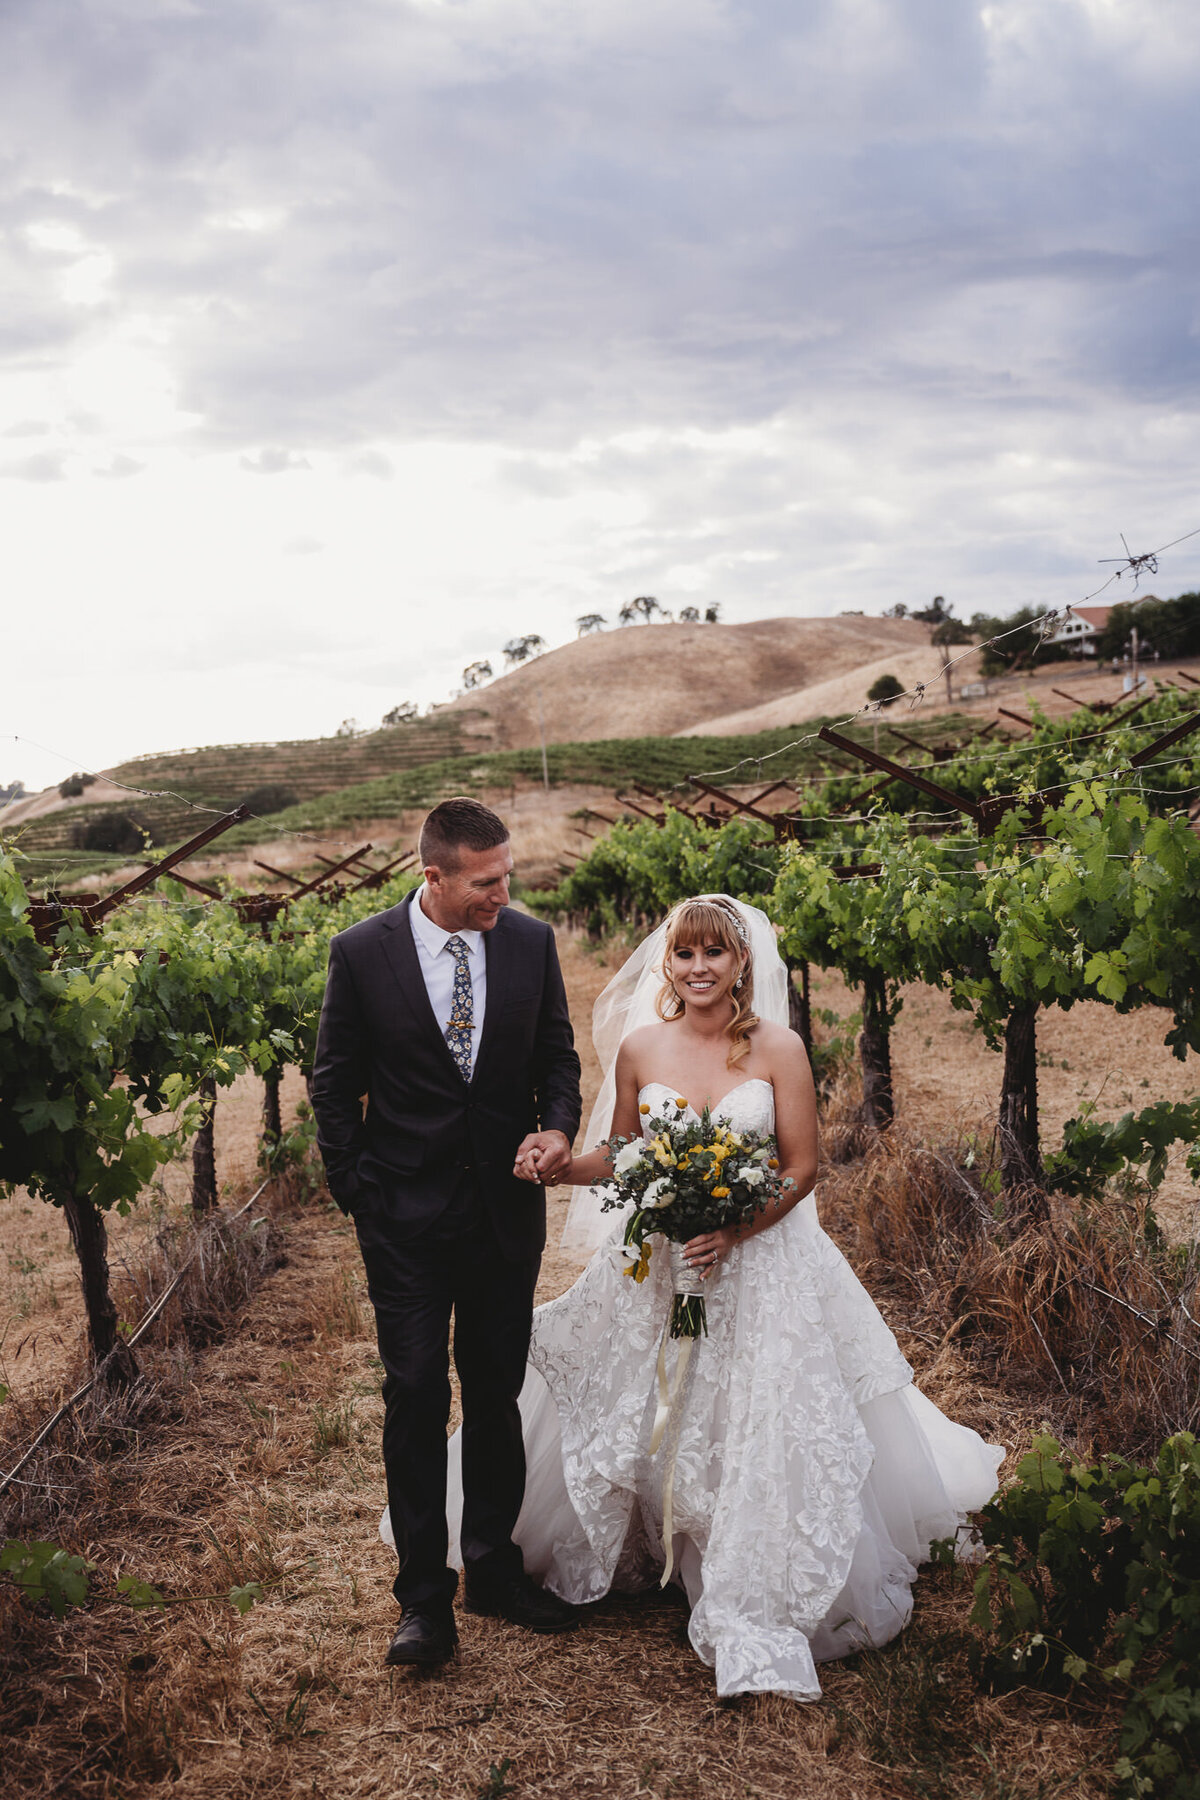 Bride and groom walking hand in hand in a vineyard in California